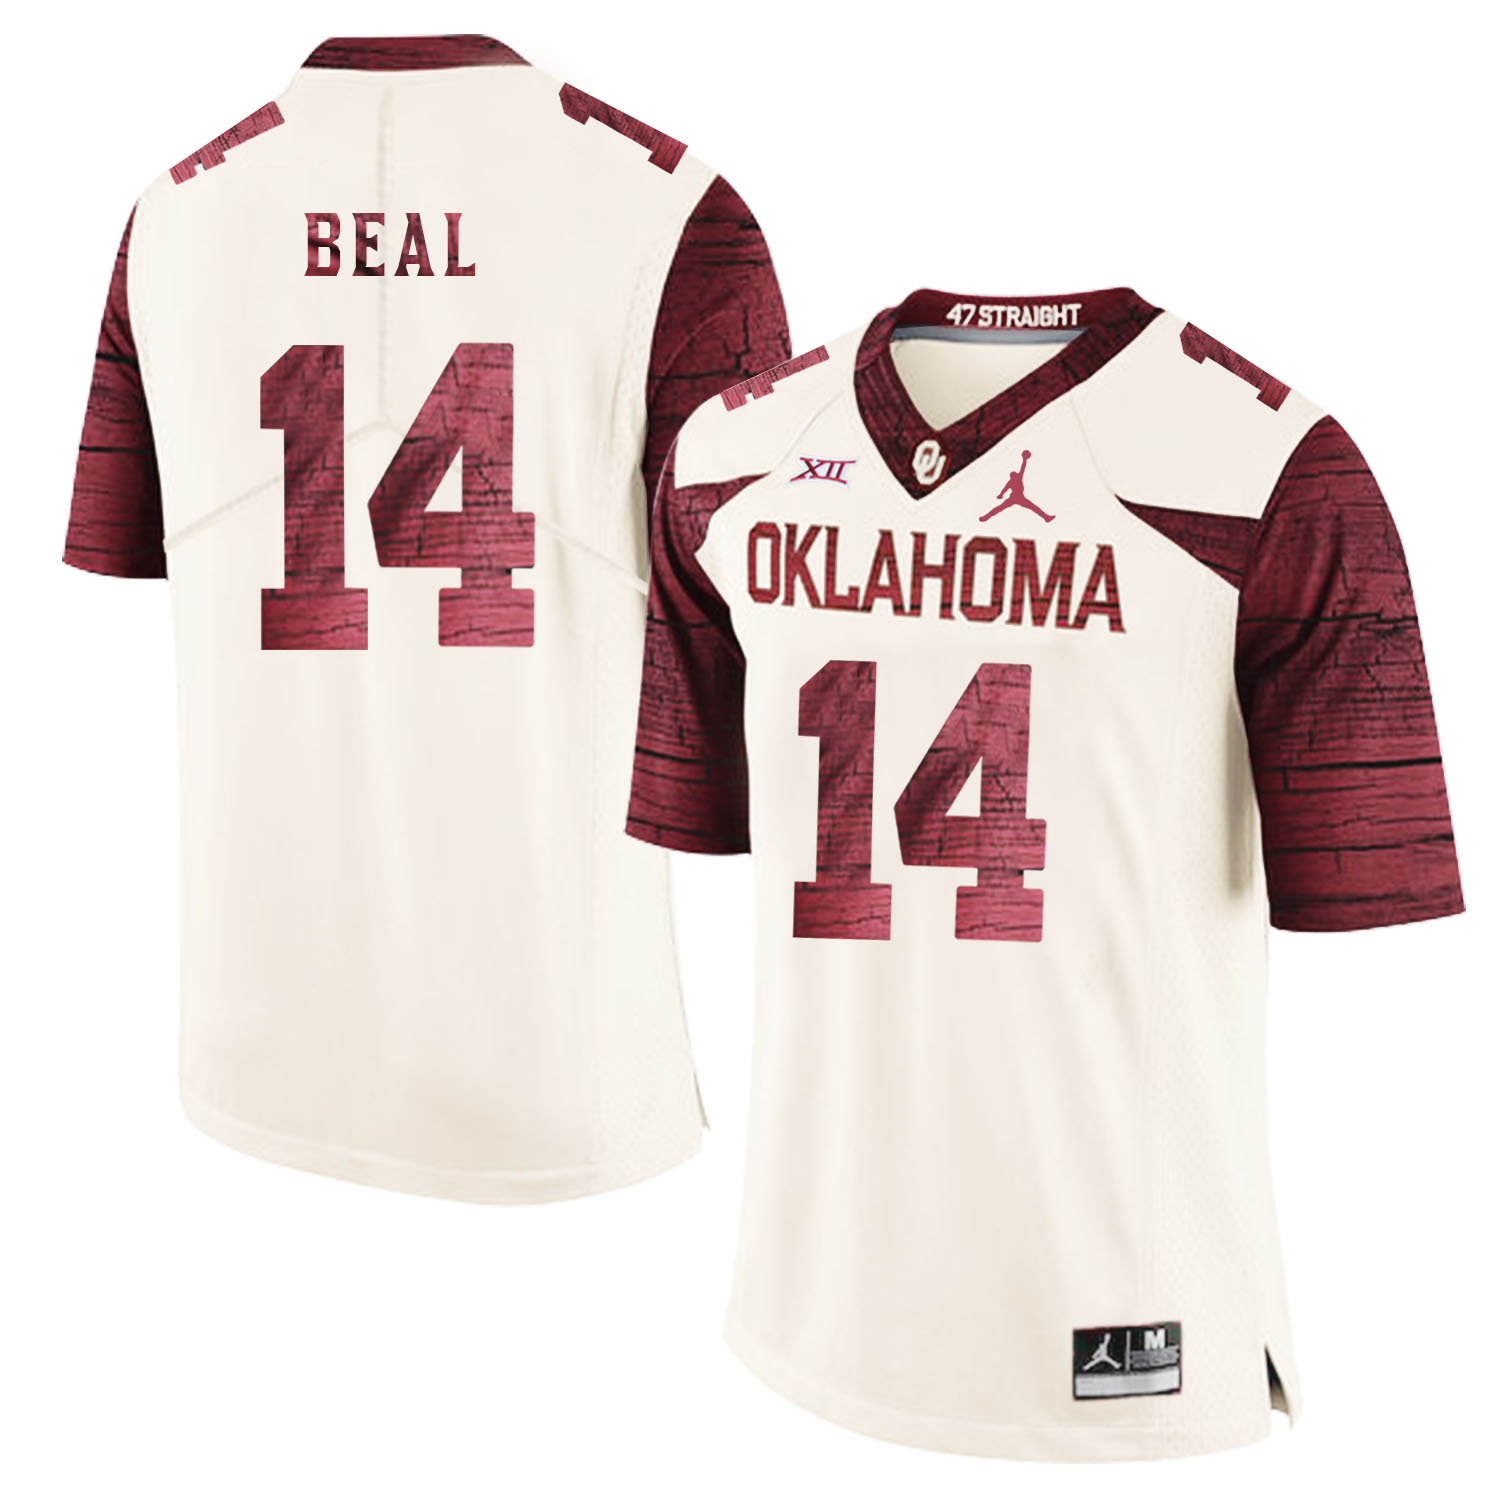 Oklahoma Sooners 14 Emmanuel Beal White 47 Game Winning Streak College Football Jersey